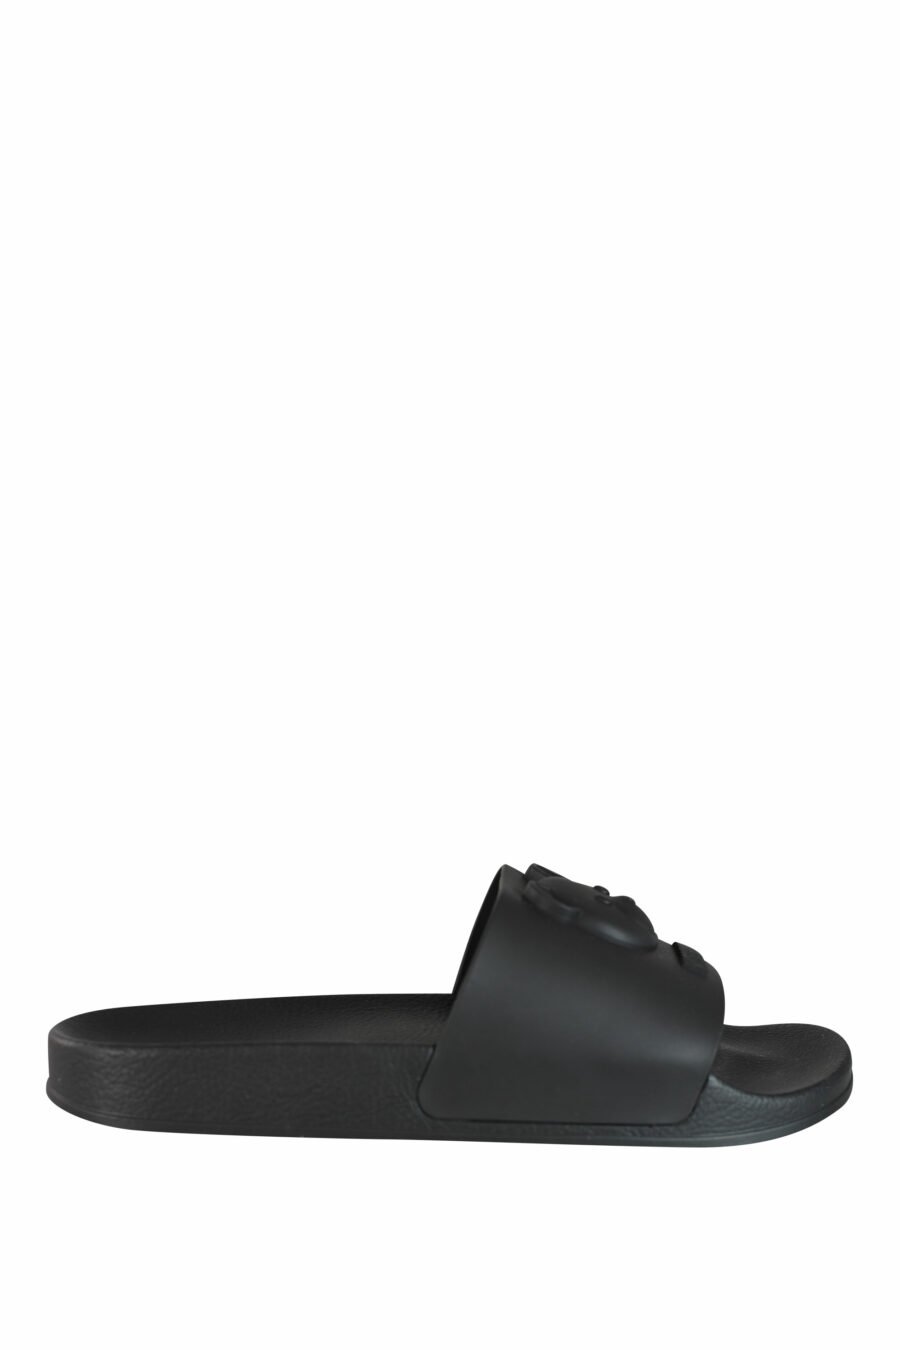 Black flip flops with monochrome embossed maxilogo - IMG 3573